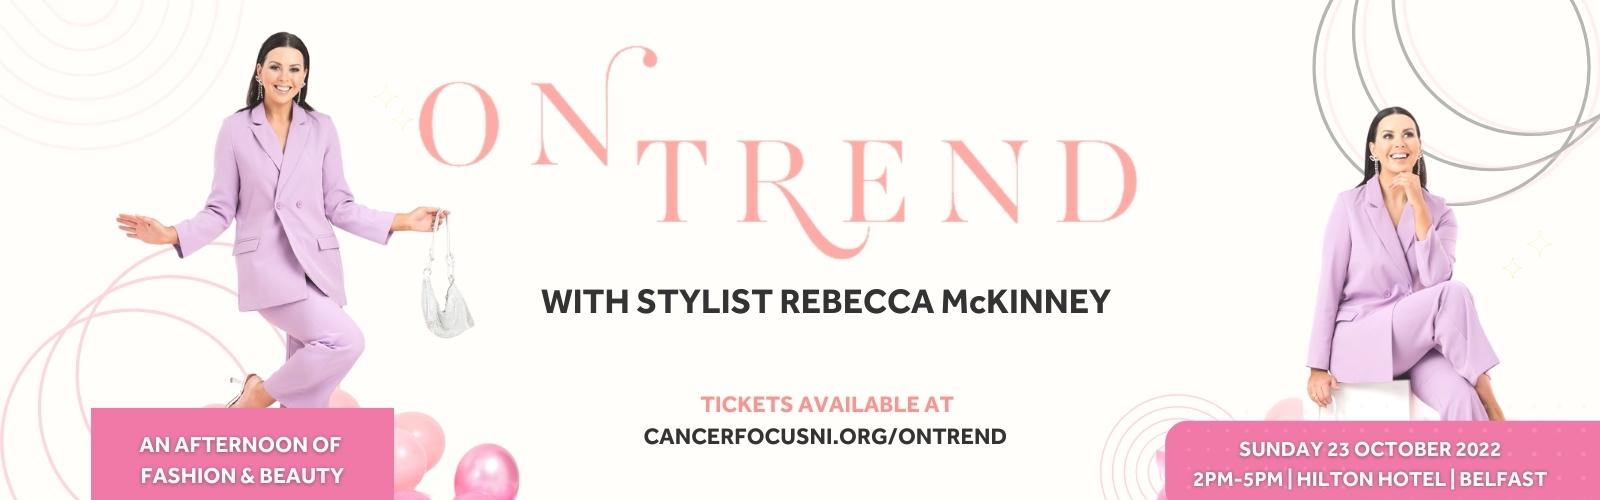 On Trend with Stylist Rebecca McKinney